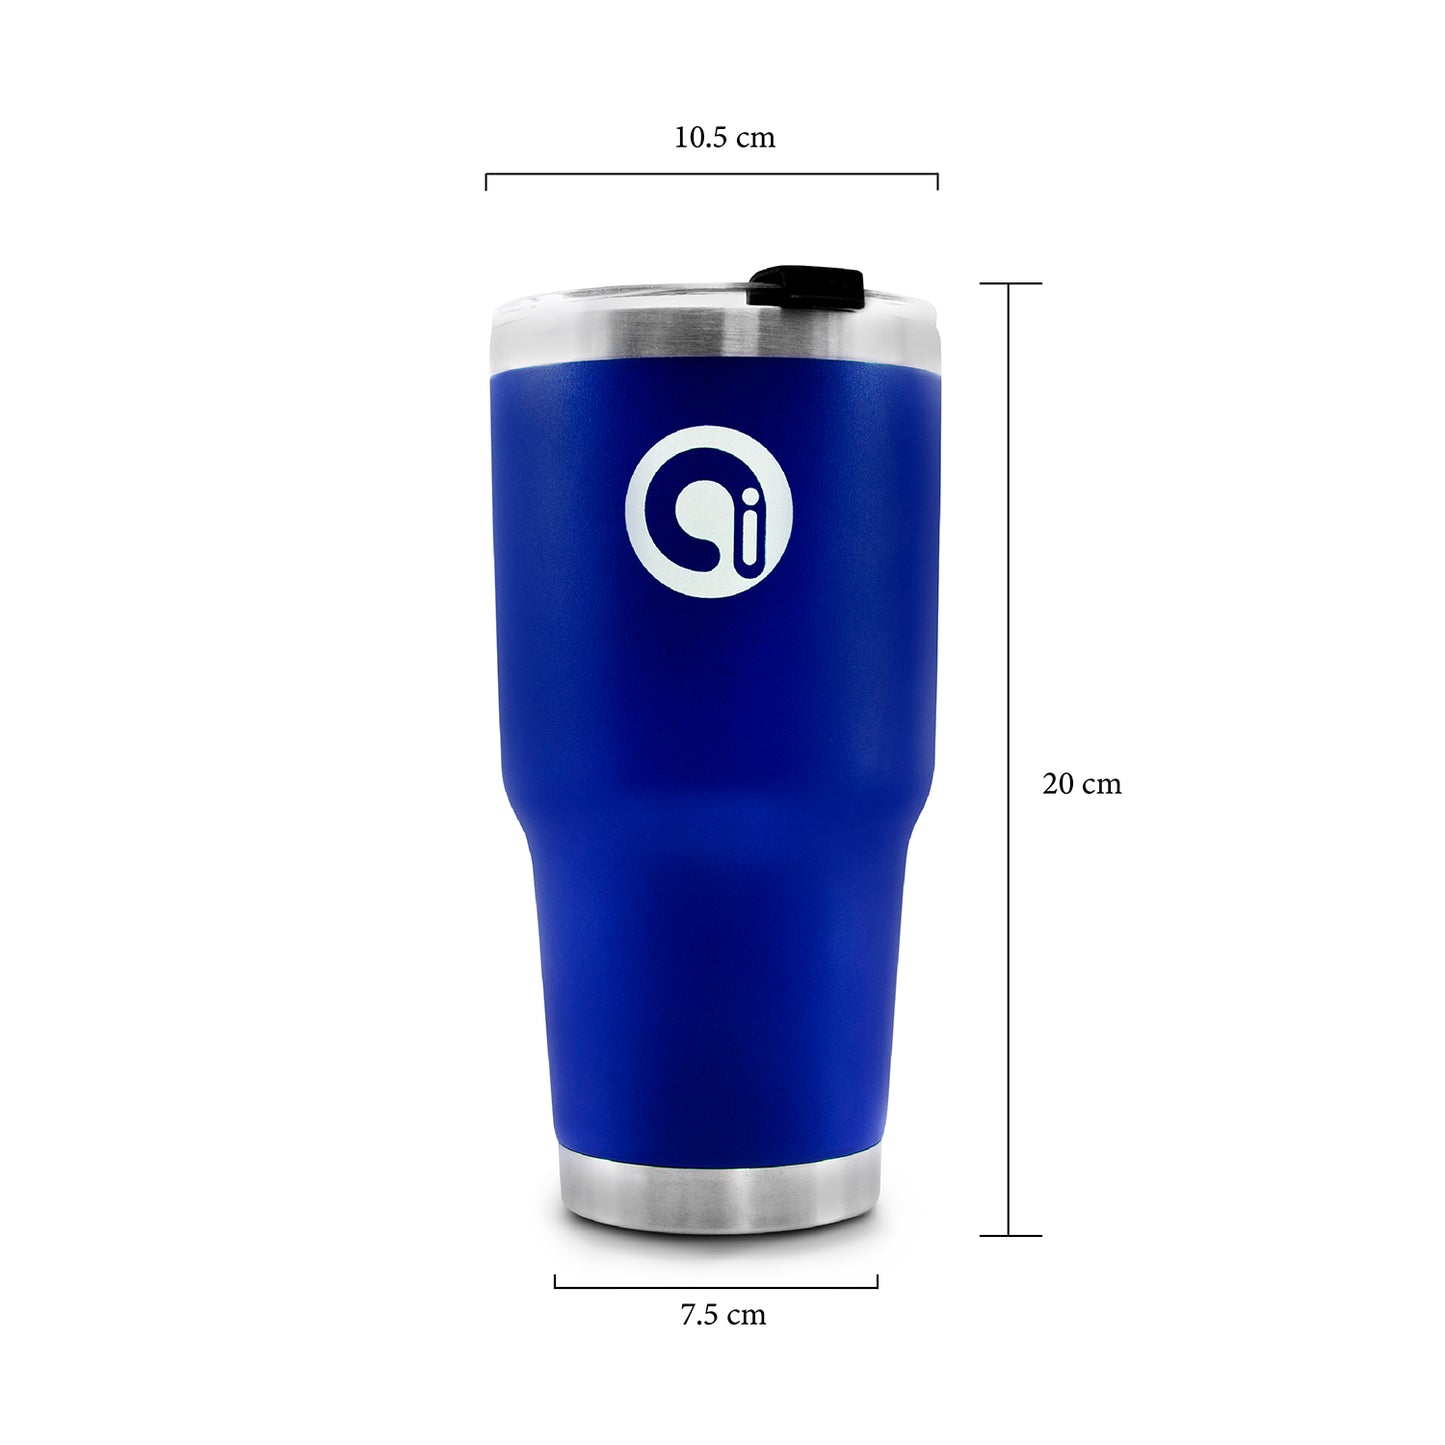 Vaso térmico 800 ml Azul